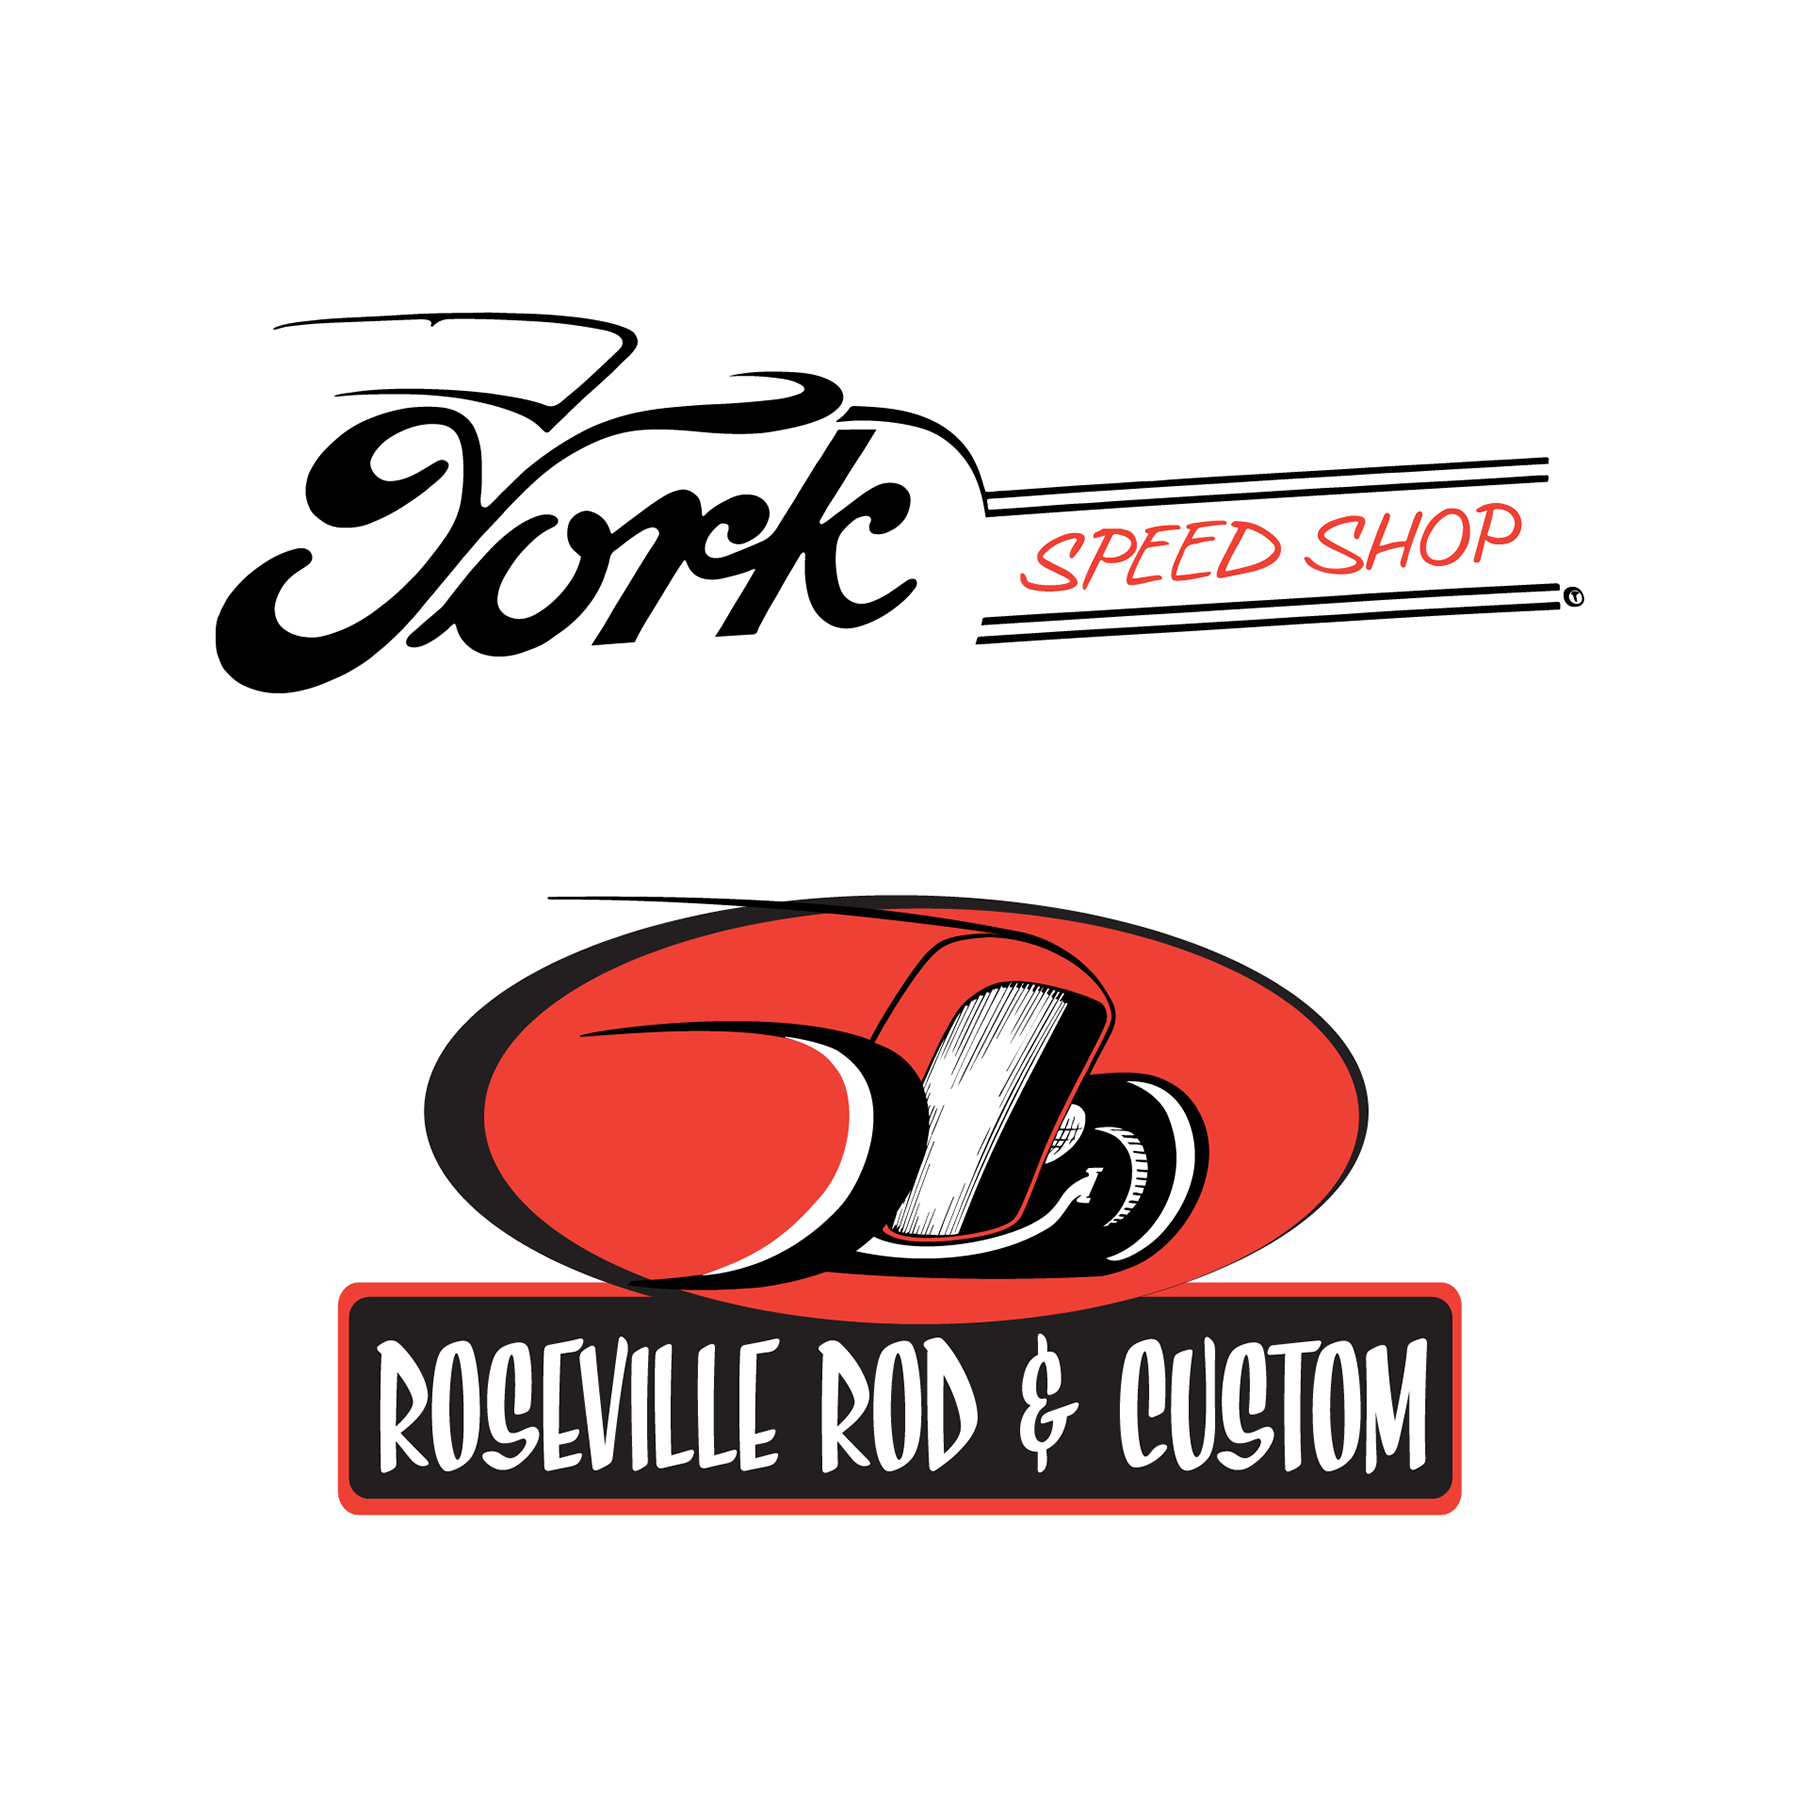 Roseville Rod & Custom and York Speed Shop Logos